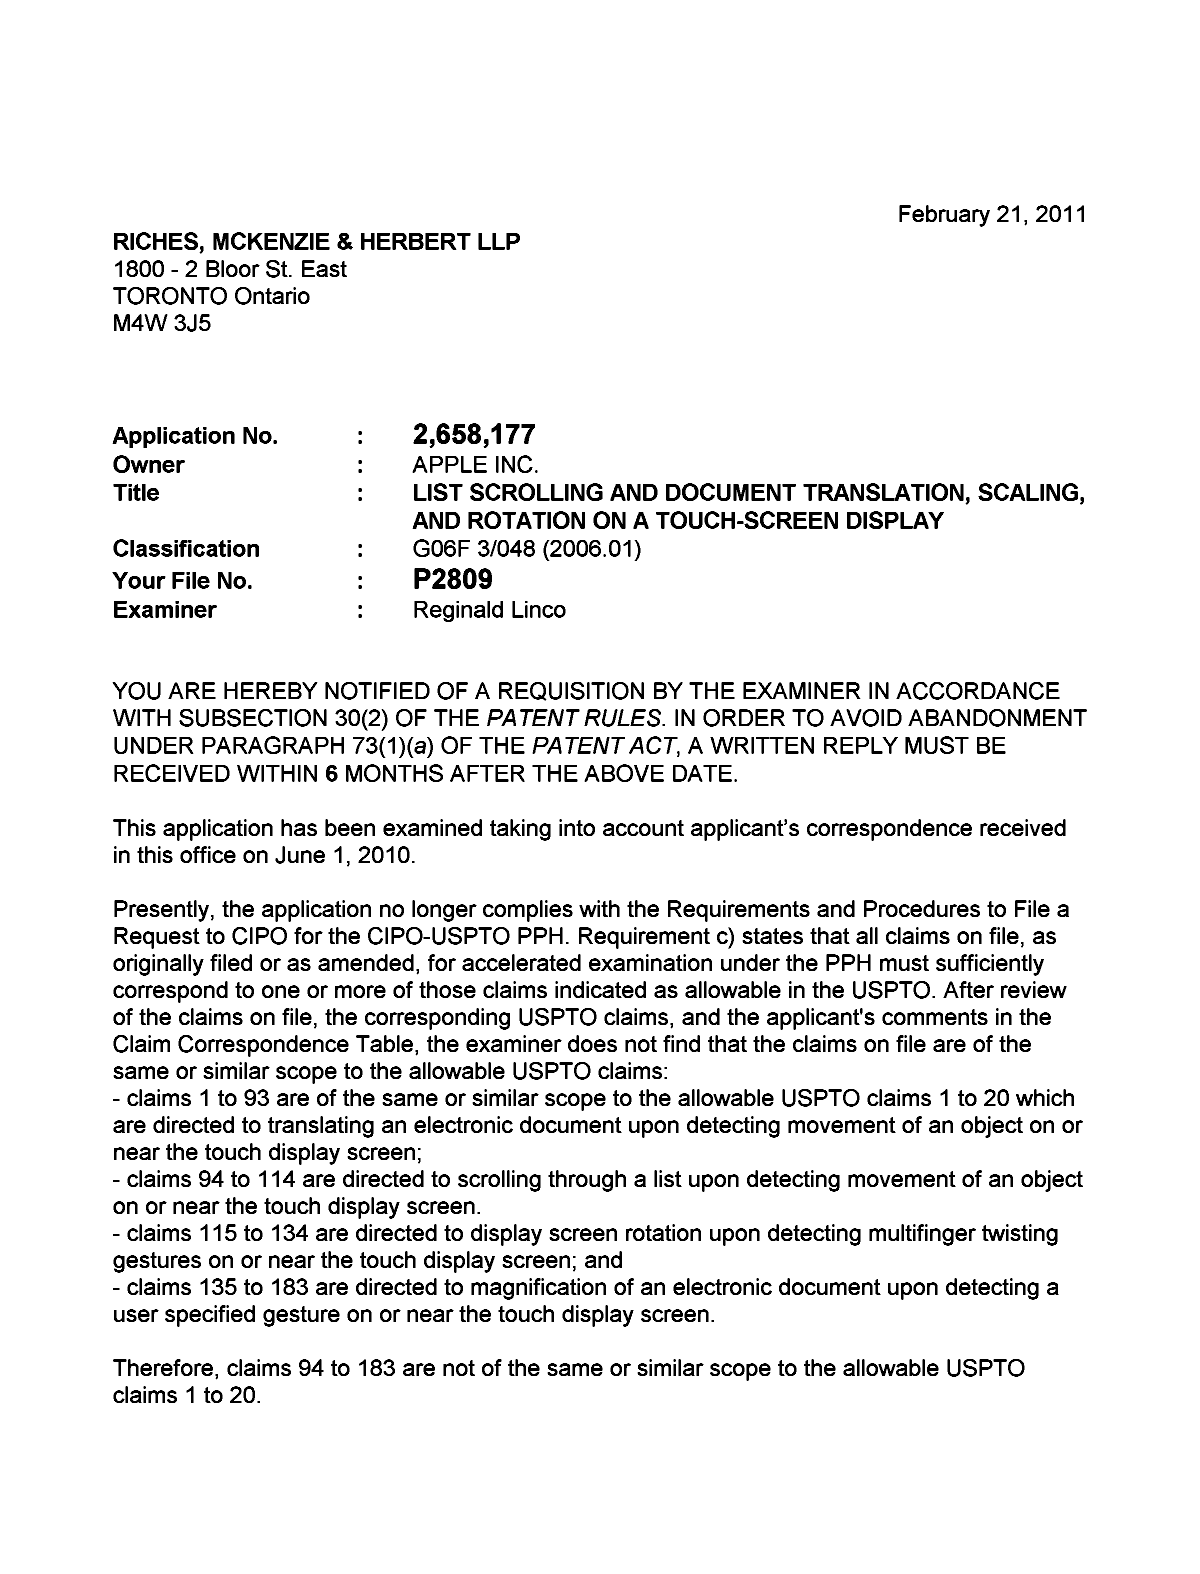 Canadian Patent Document 2658177. Correspondence 20110221. Image 1 of 2